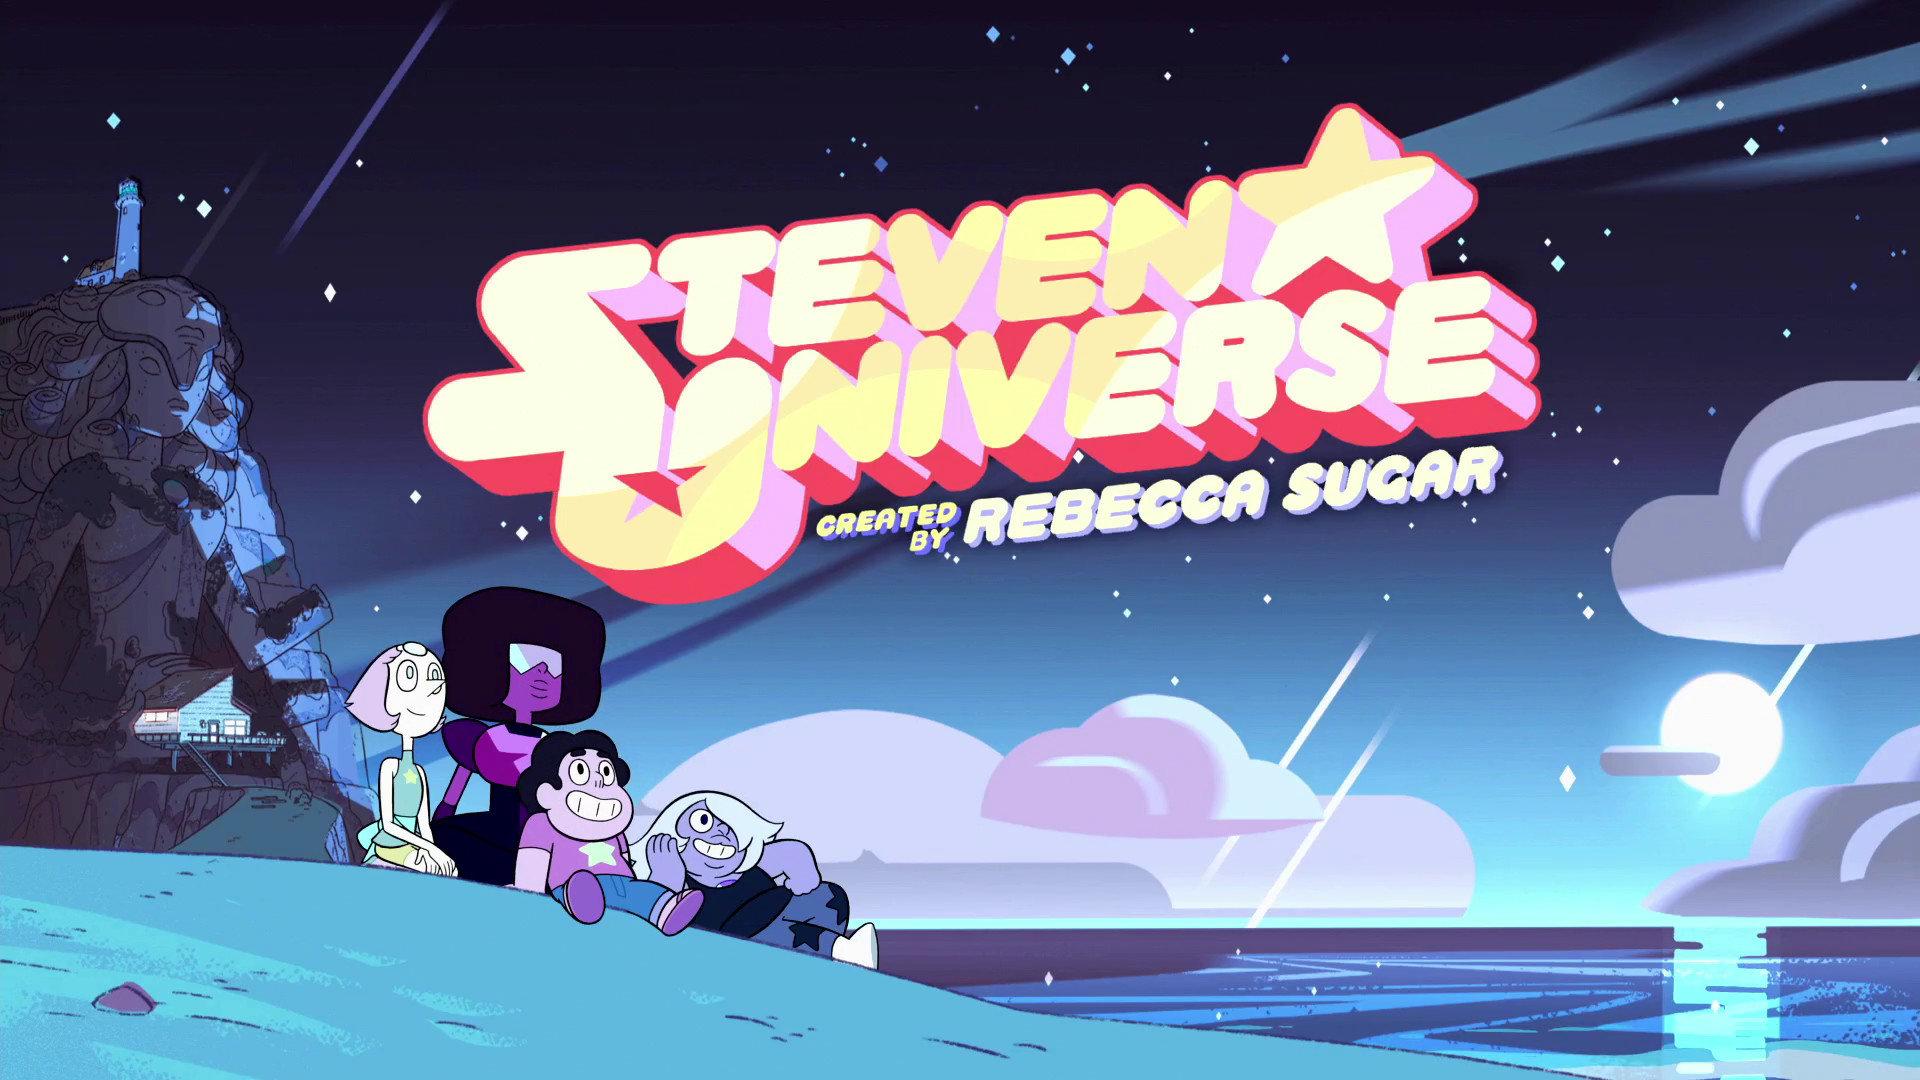 Steven Universe wallpaper 1920x1080 Full HD (1080p) desktop background